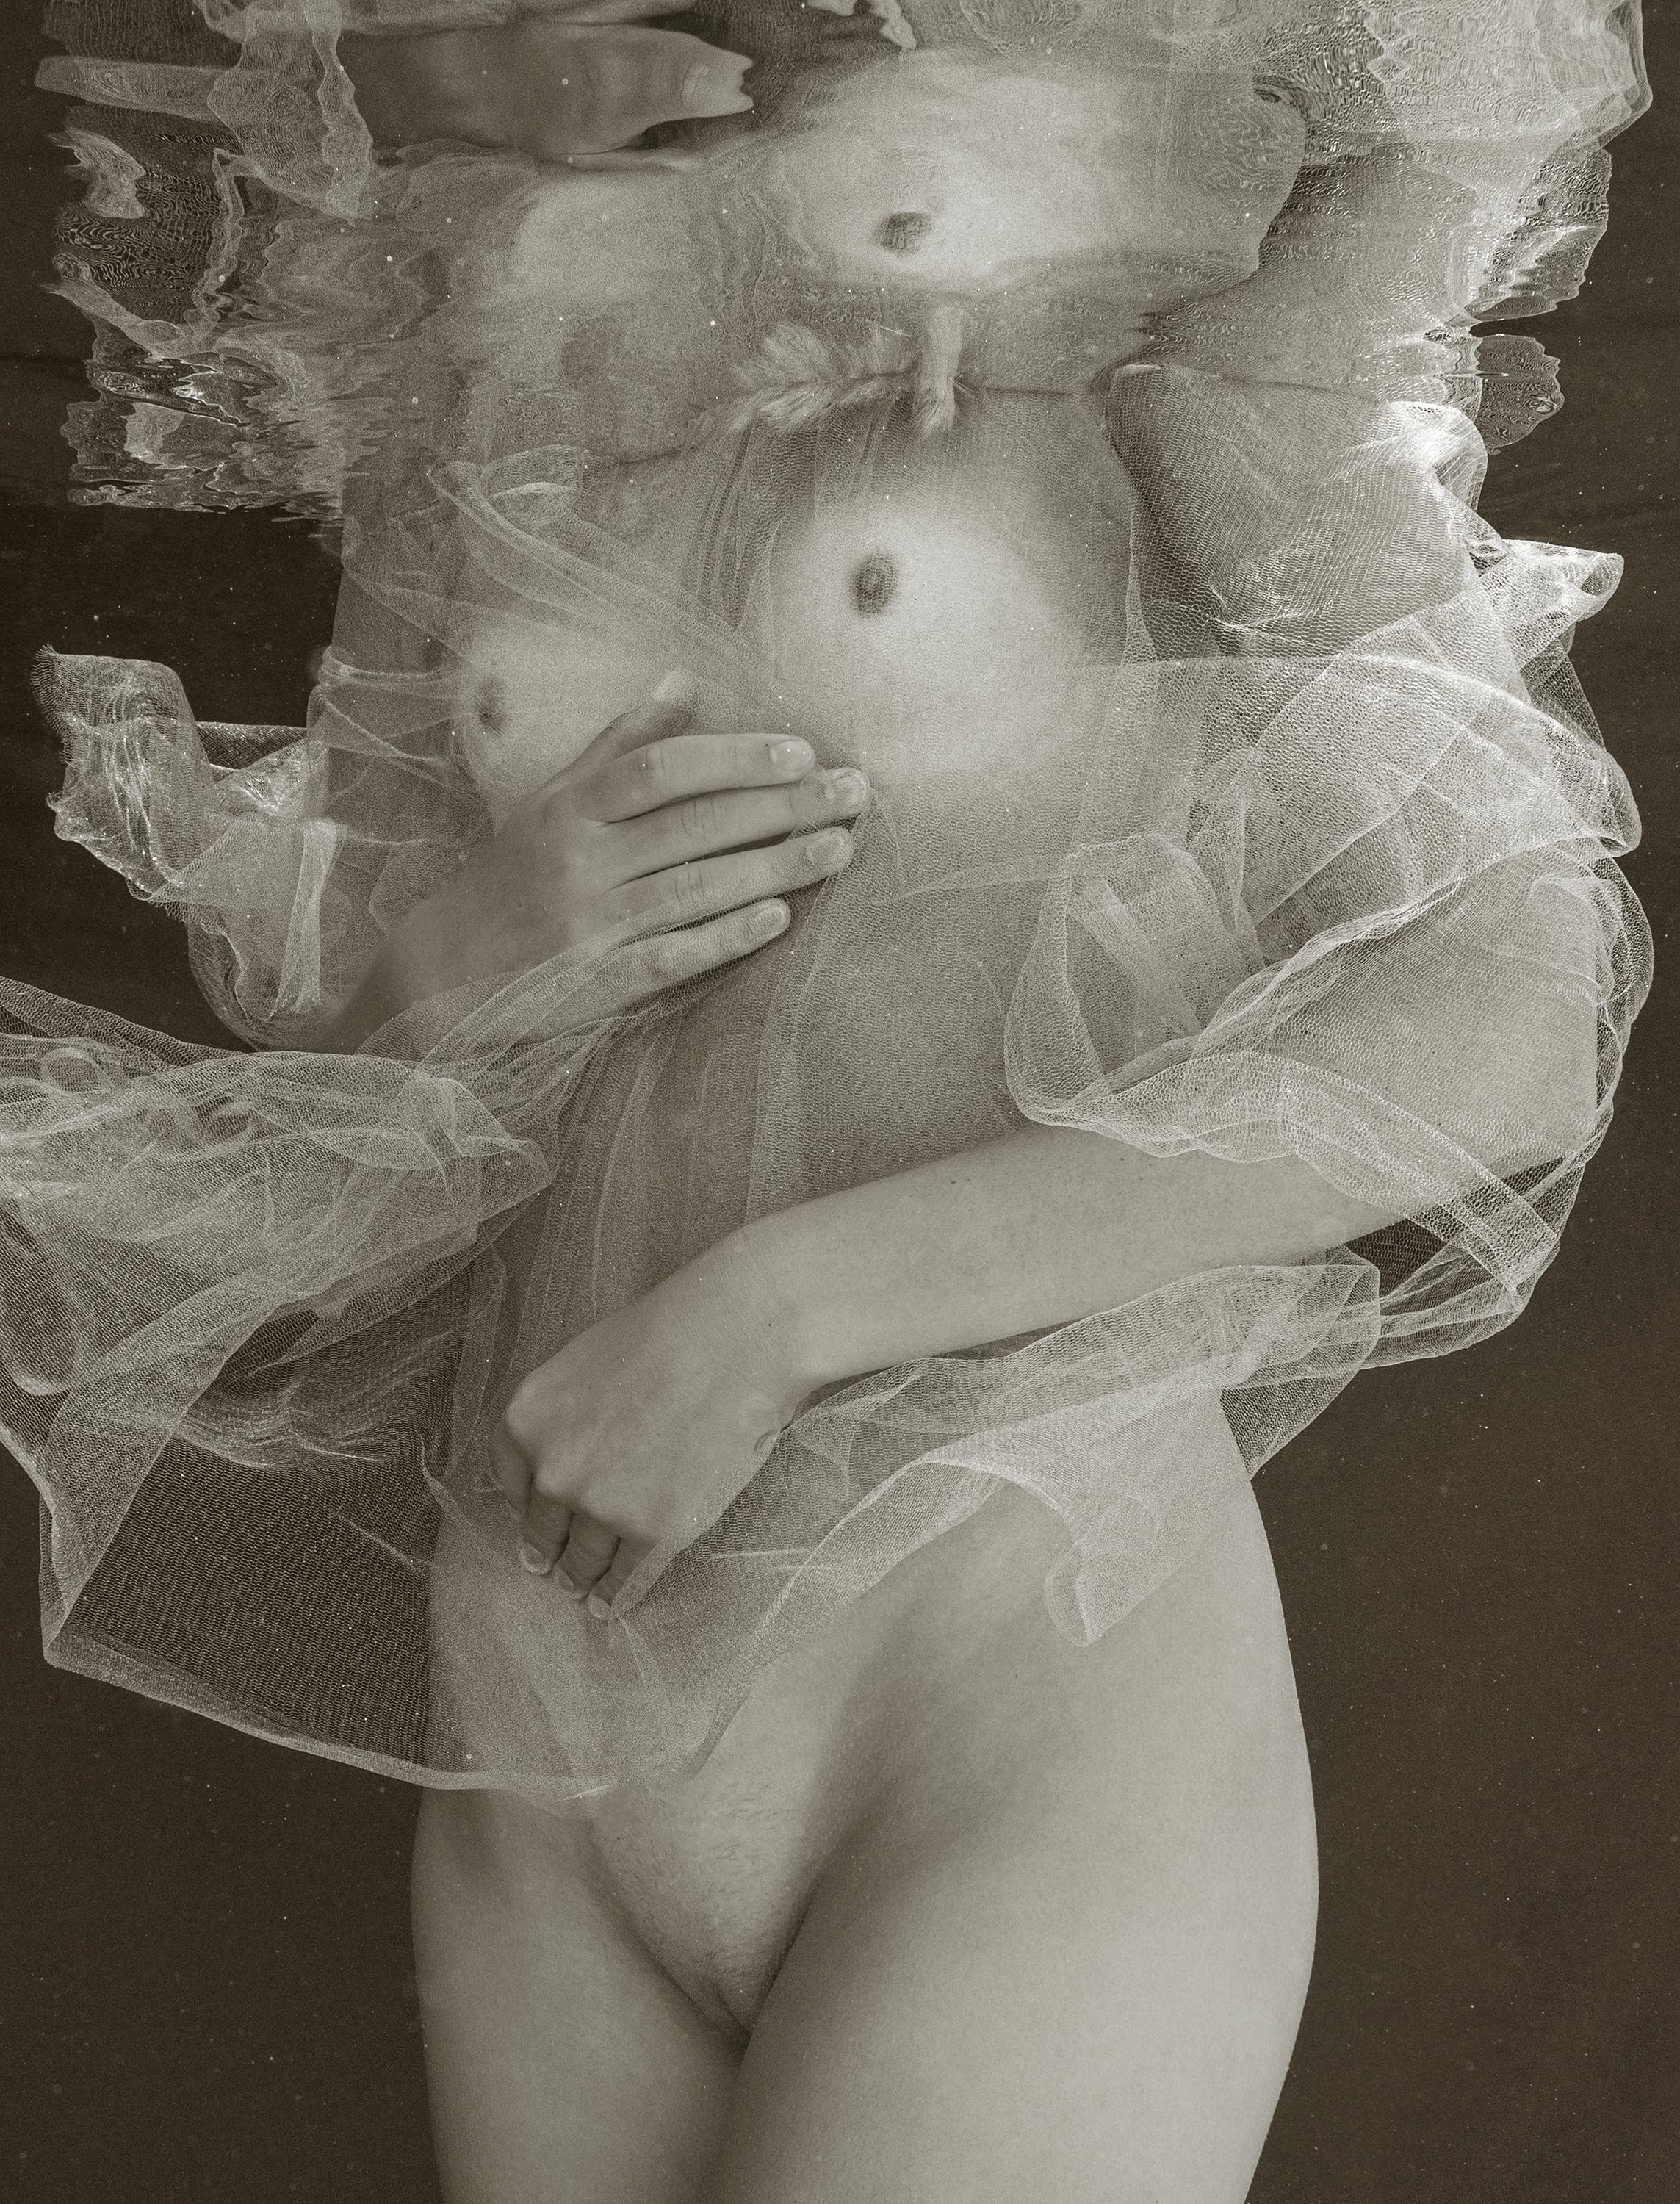 Bride - underwater black & white nude photograph - archival pigment print 35x28